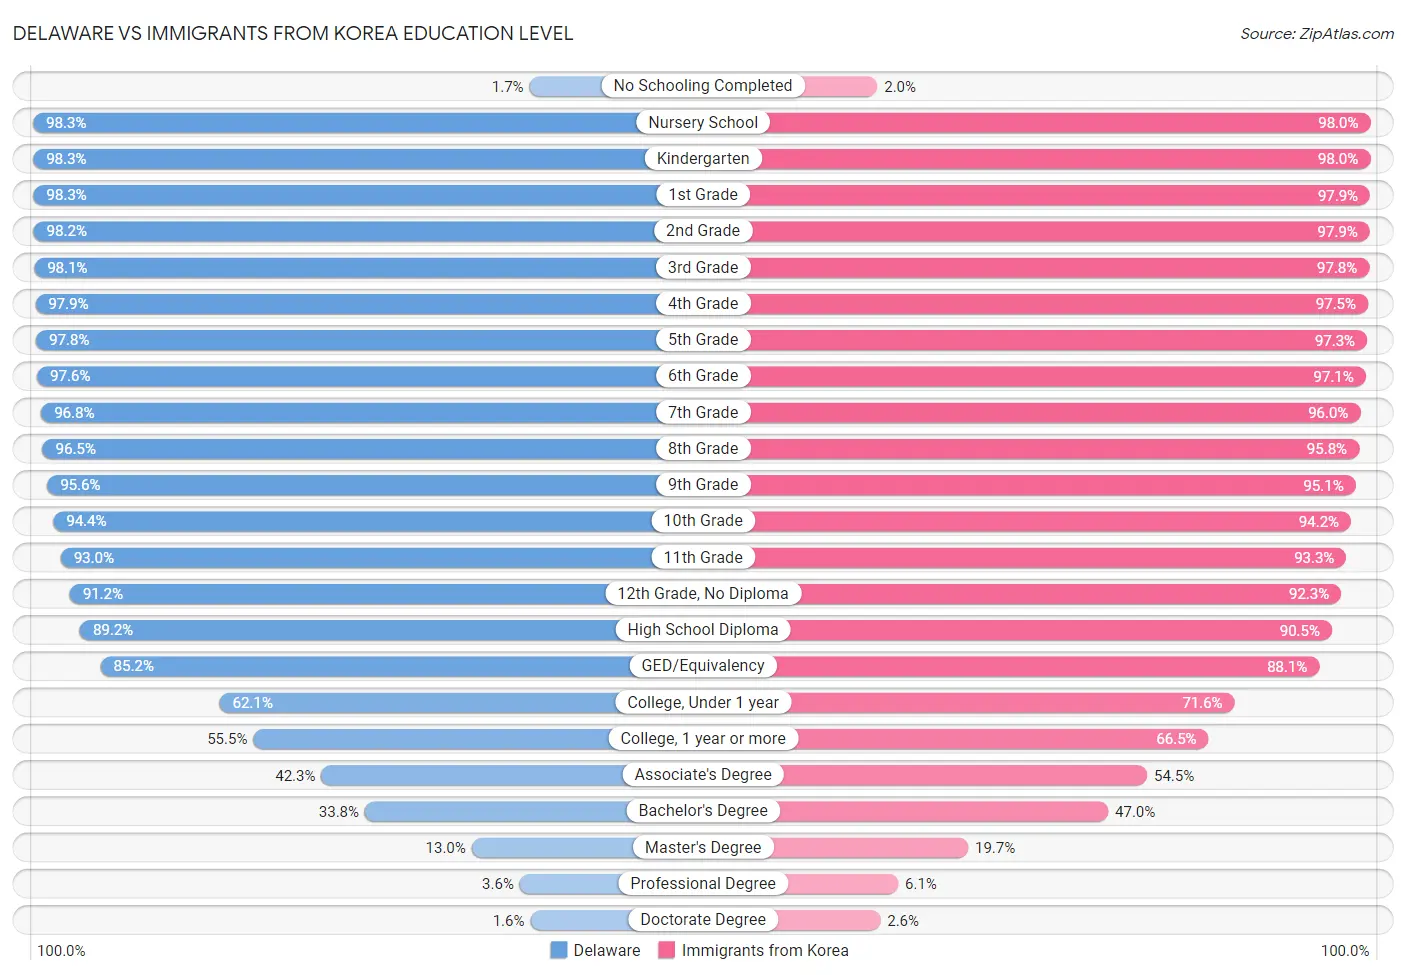 Delaware vs Immigrants from Korea Education Level